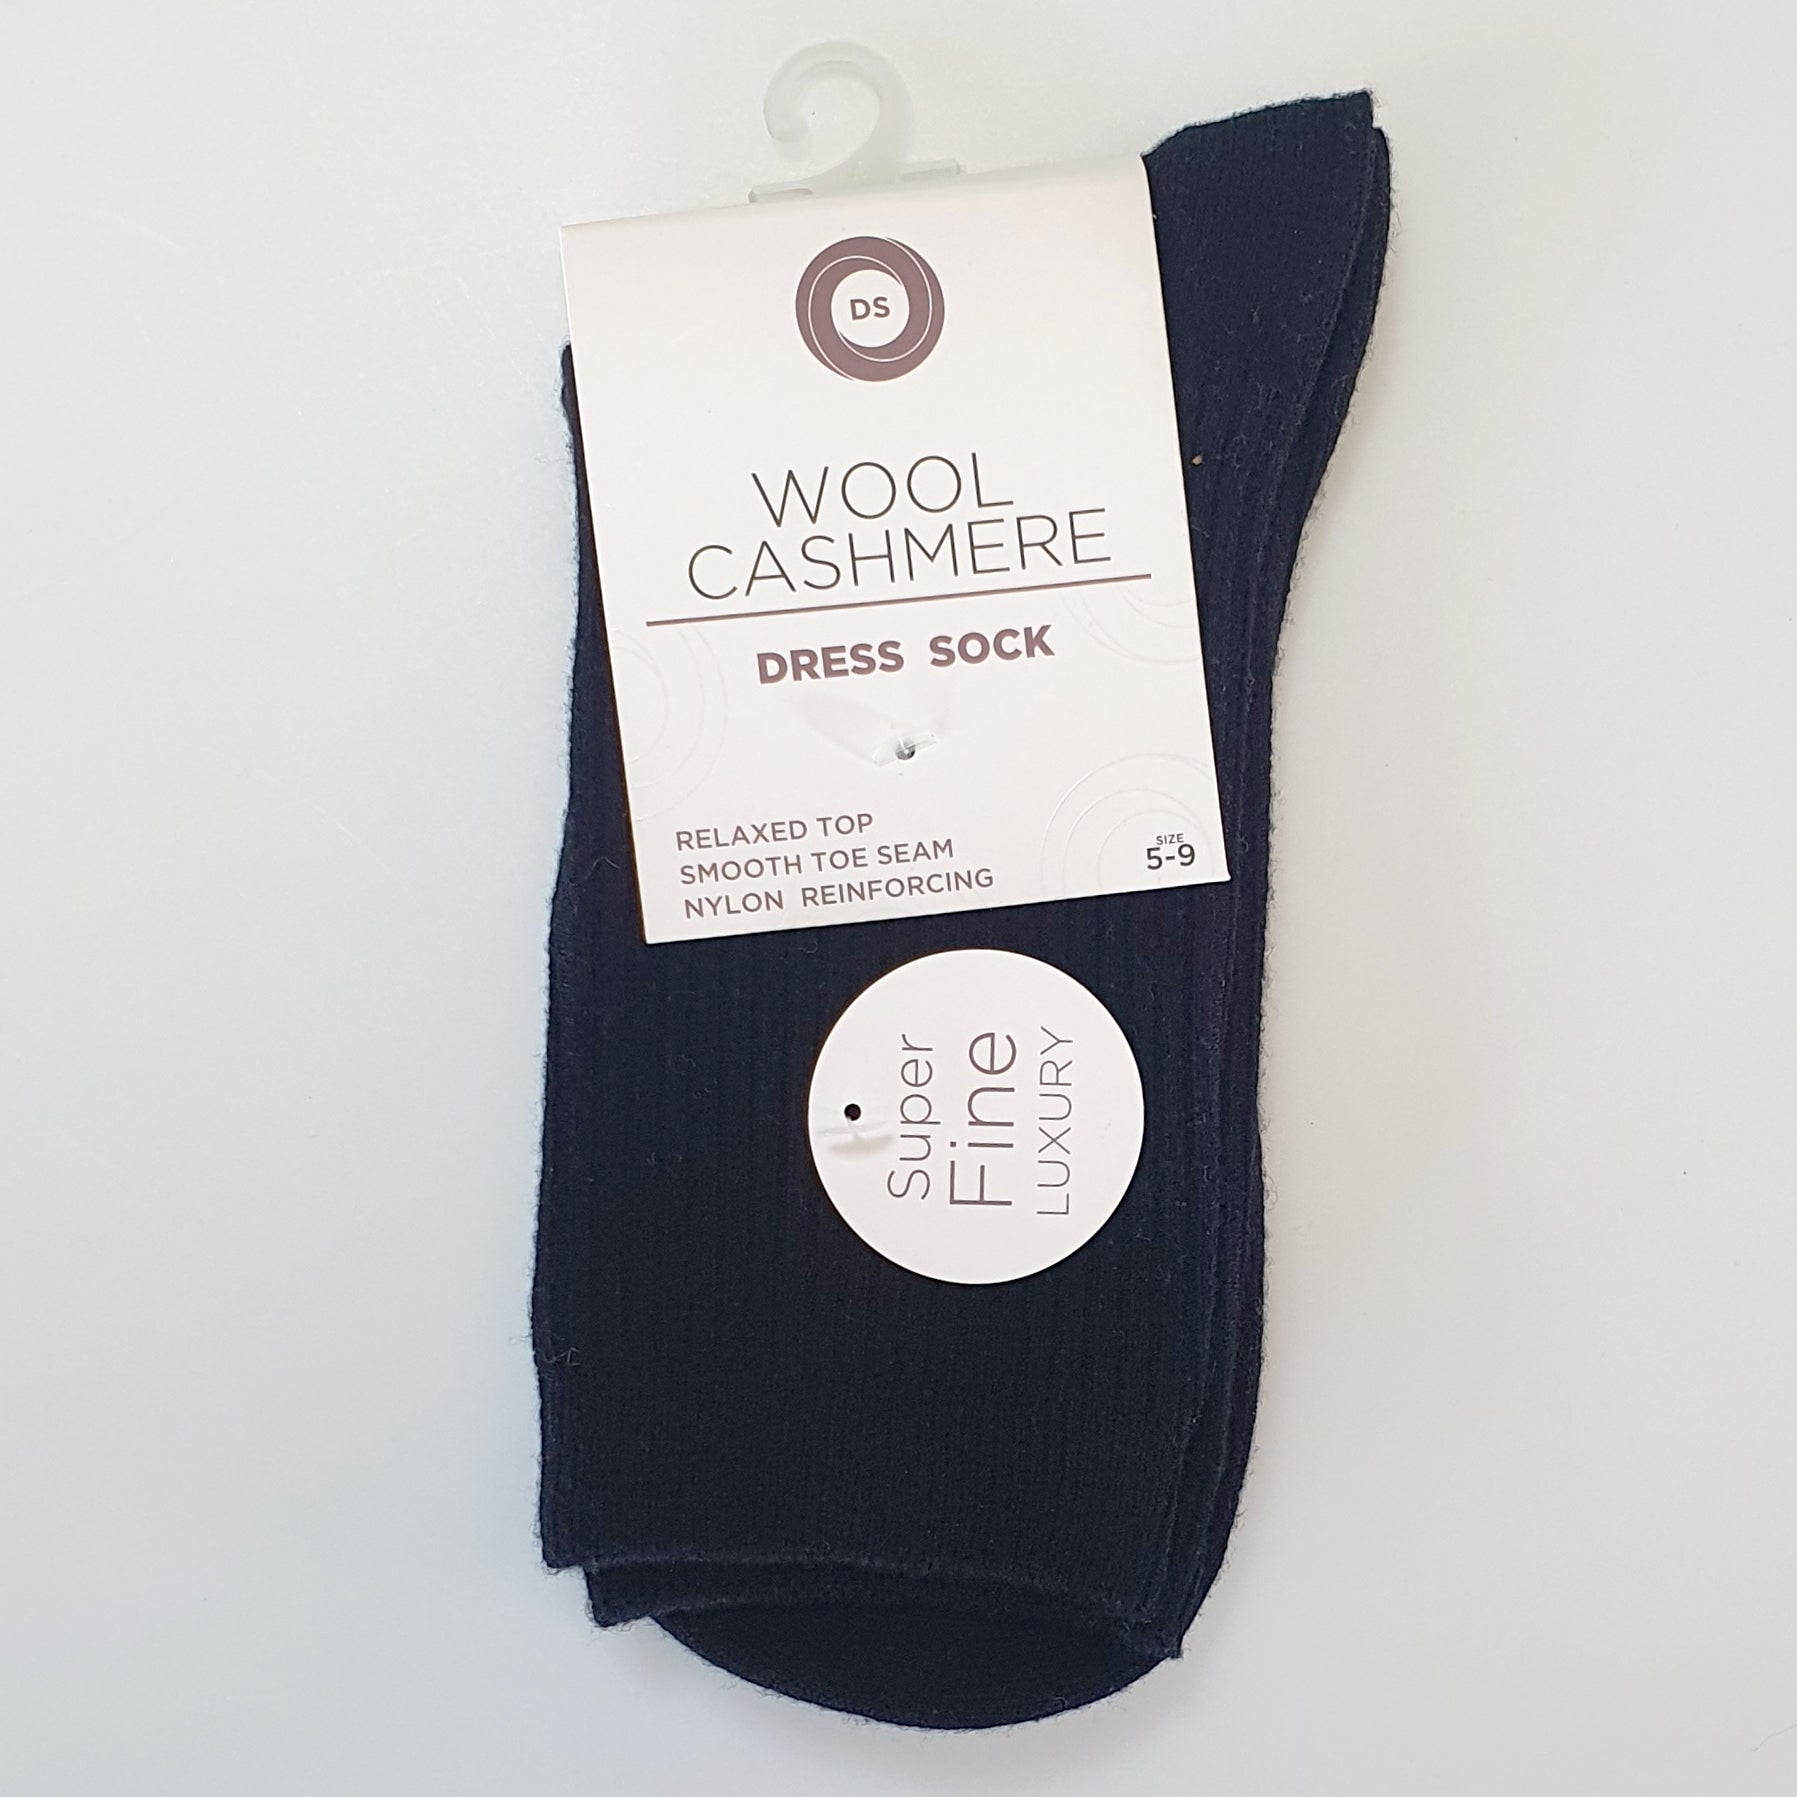 DS Wool Cashmere Dress Socks - Ribbed Black